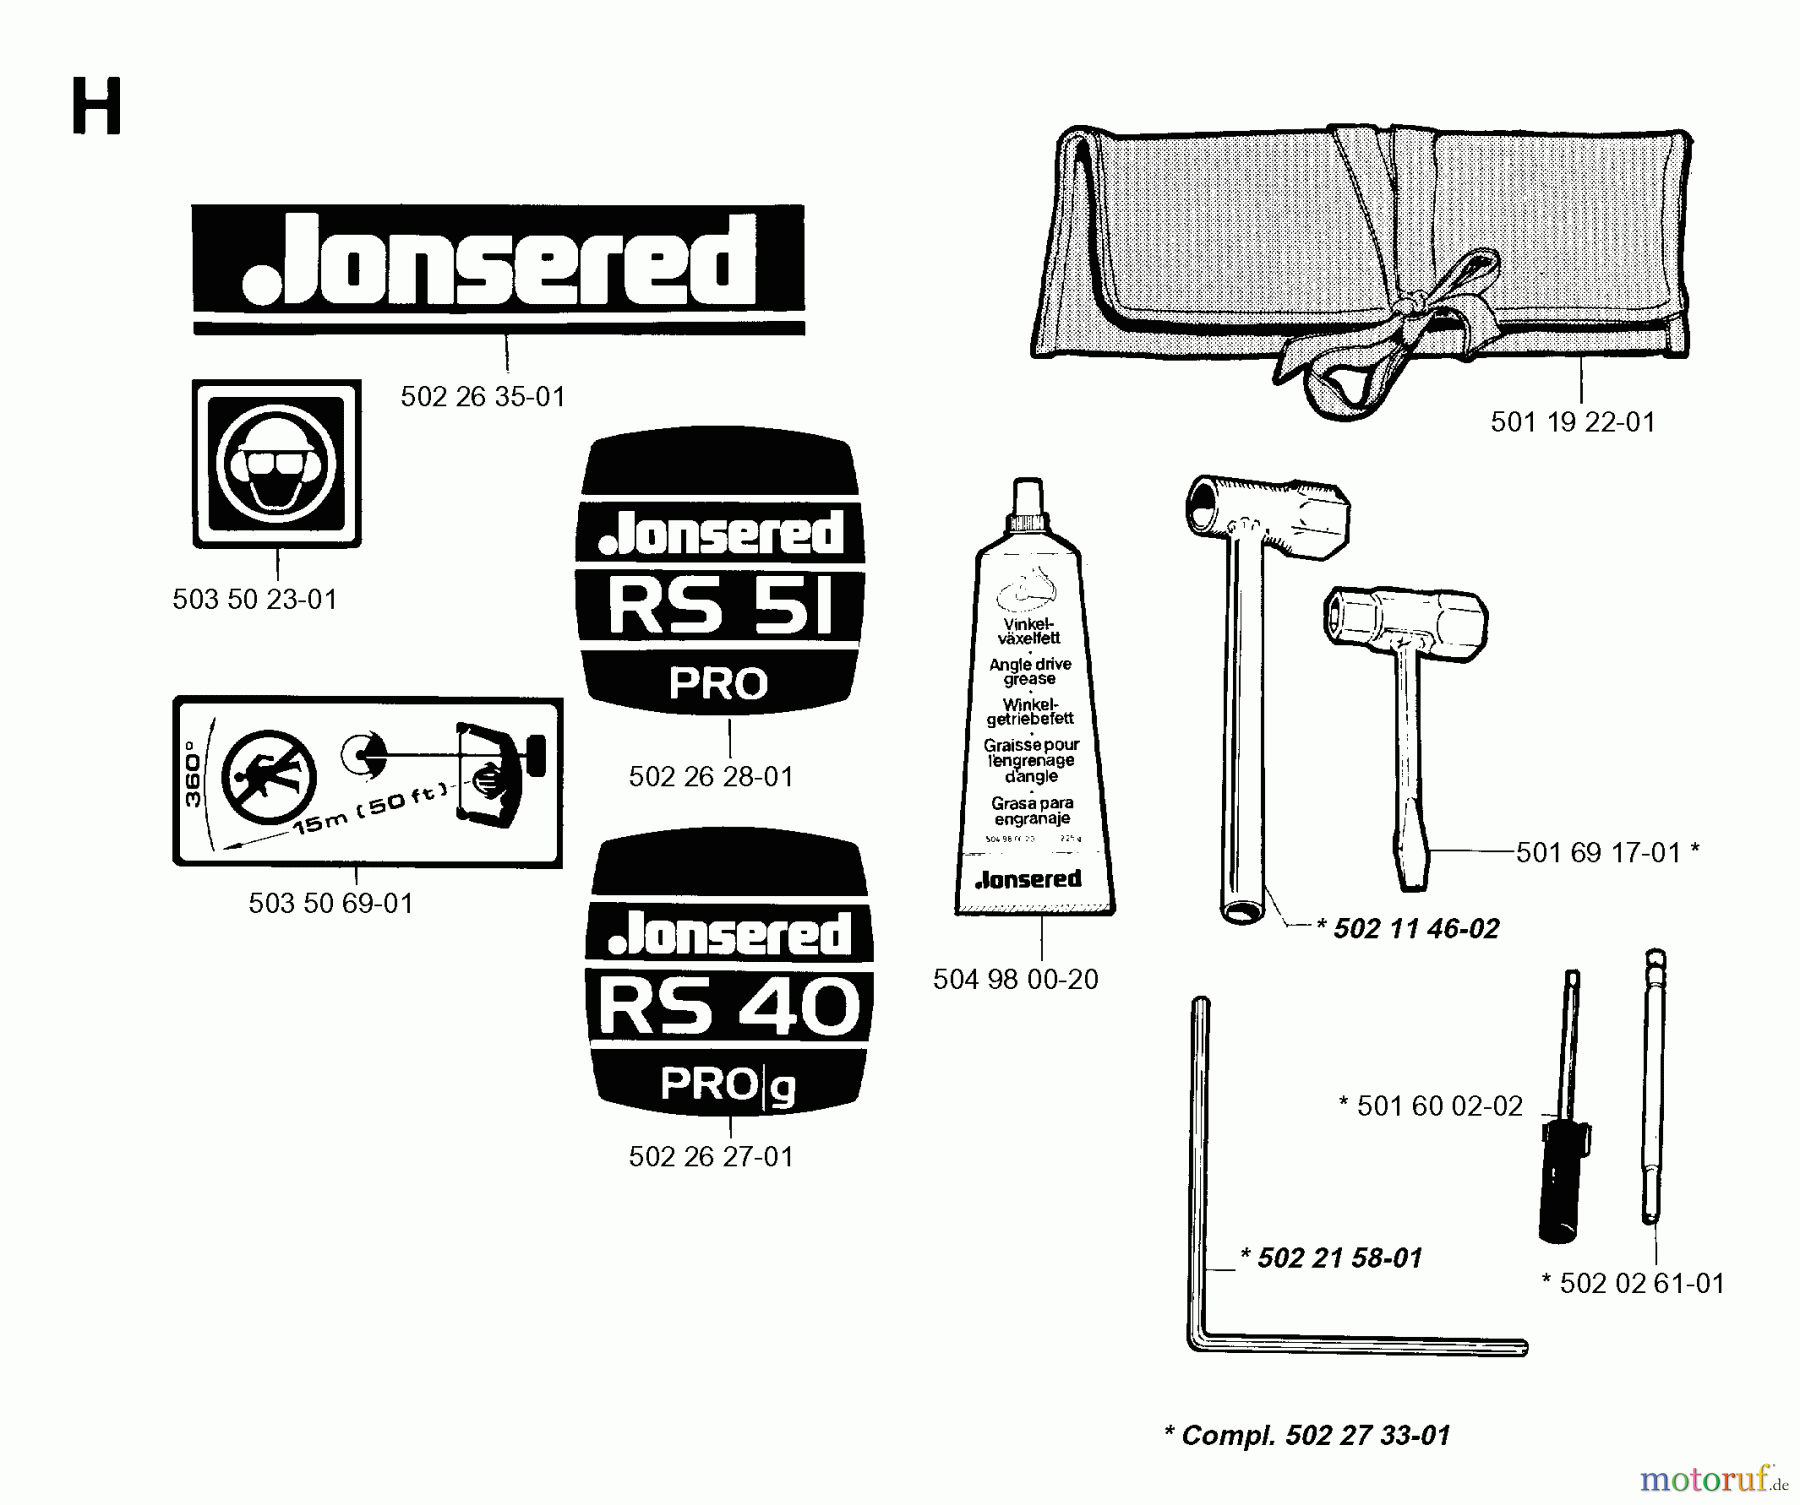  Jonsered Motorsensen, Trimmer RS51 - Jonsered String/Brush Trimmer (1993-05) ACCESSORIES #2